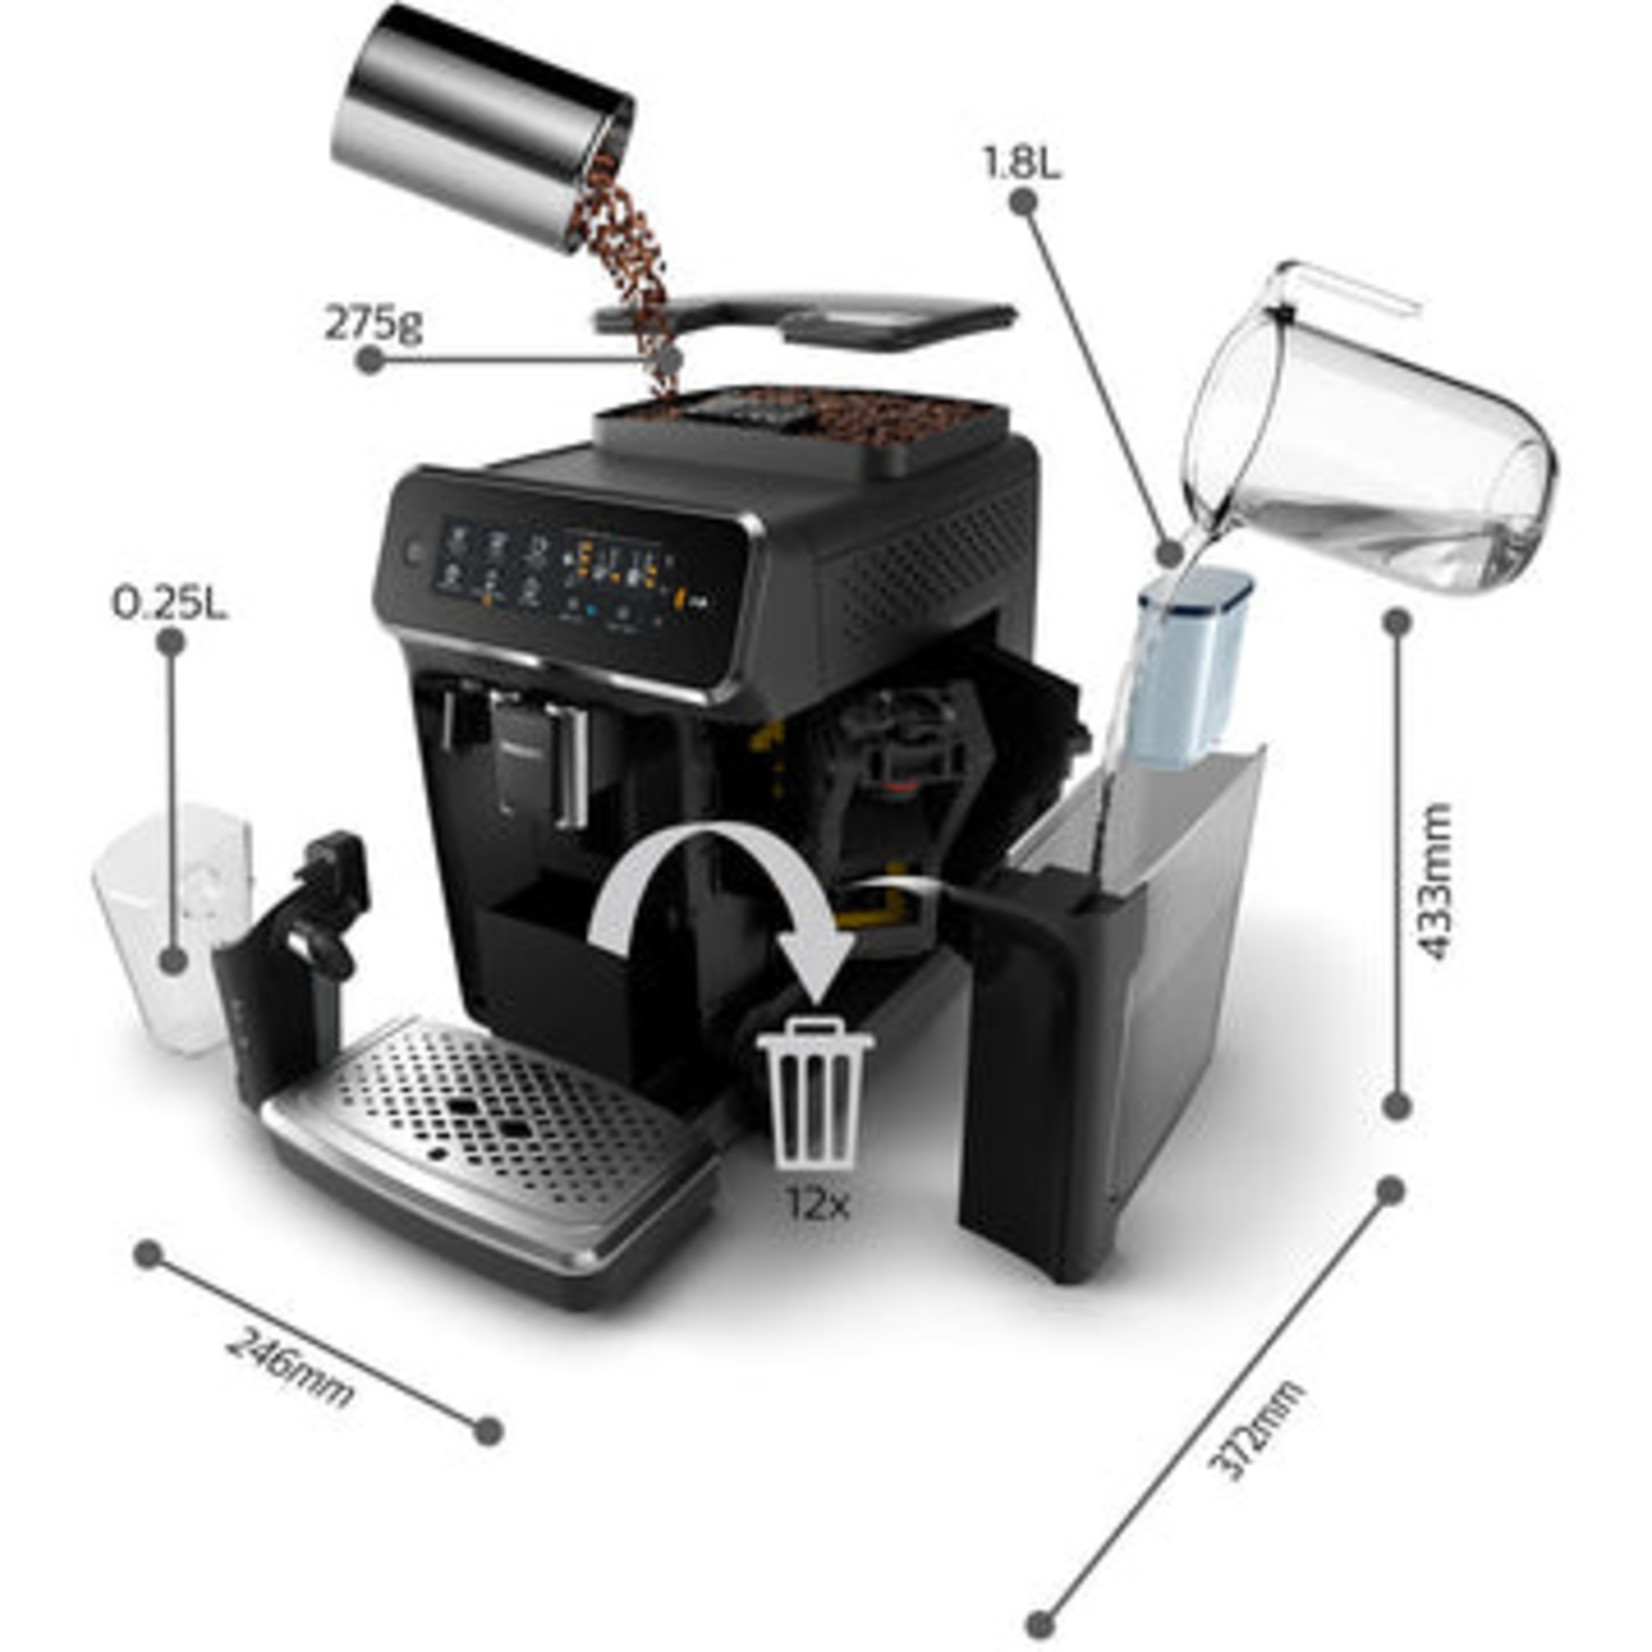 PHILIPS Série 3200 Espresso automatique Lattego